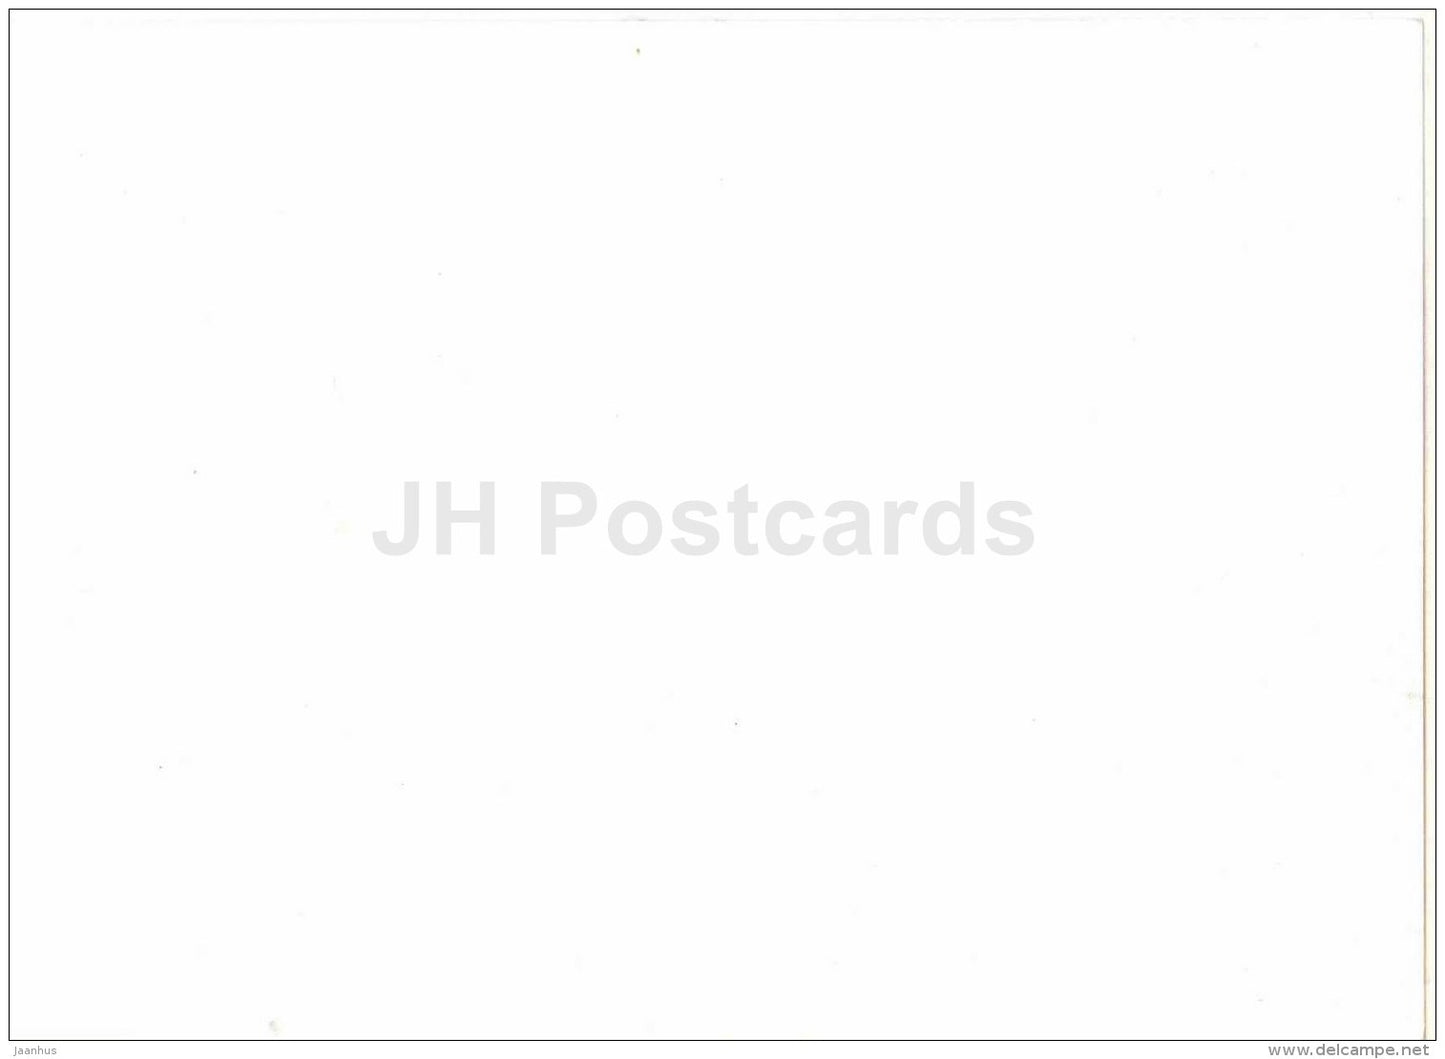 New Year Greeting Card - girl - clock - mushrooms - old postcard reproduction - Estonia - unused - JH Postcards